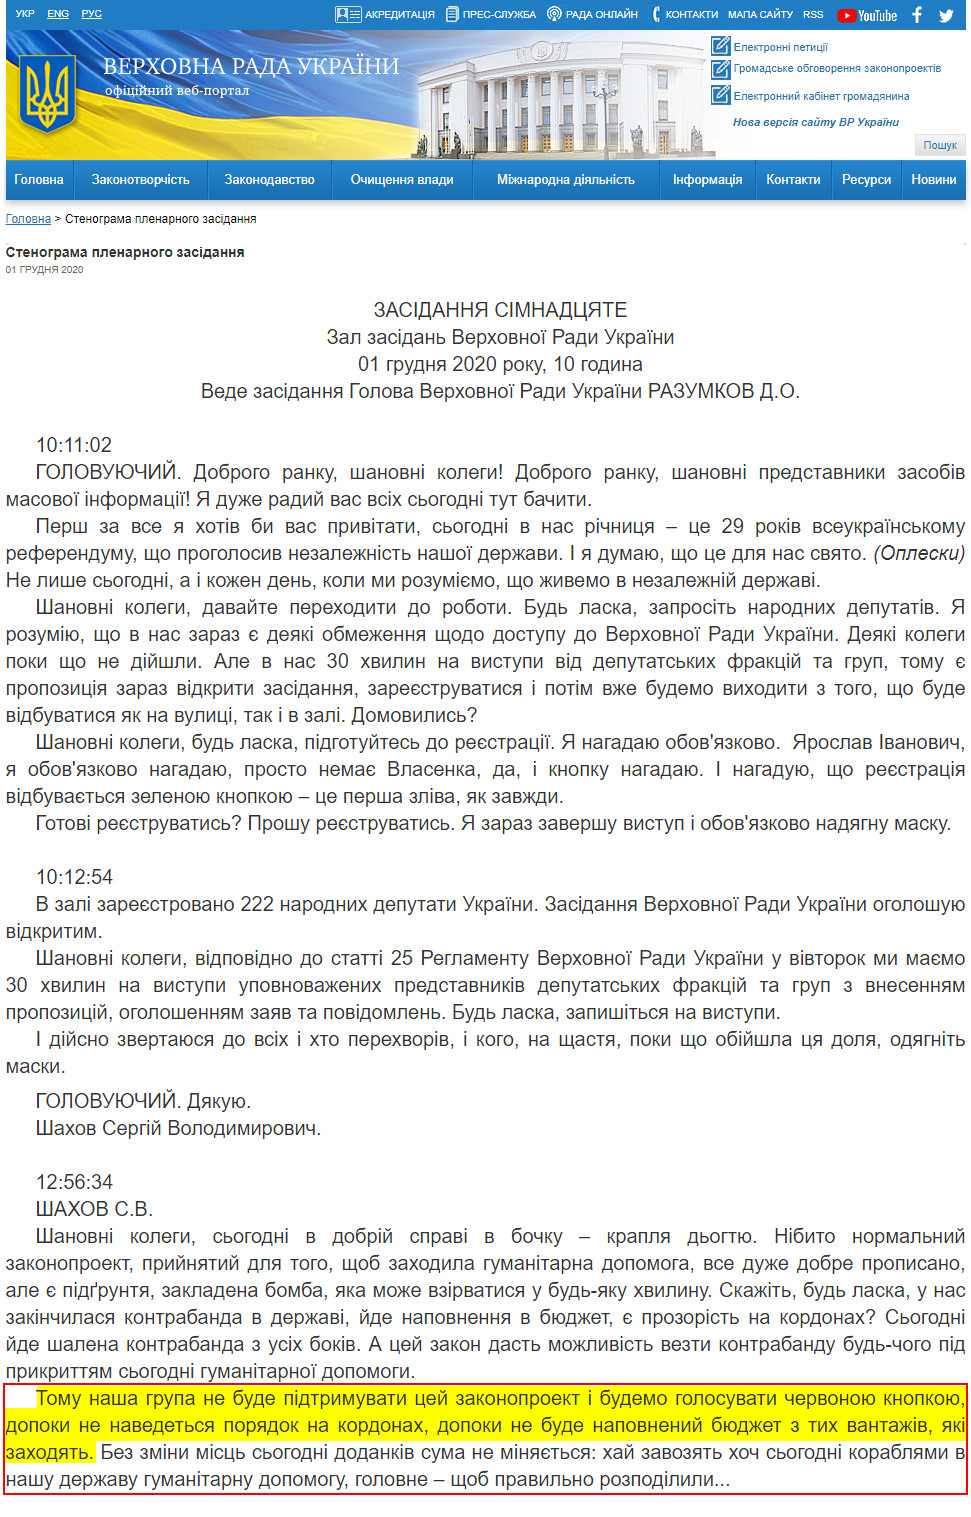 https://iportal.rada.gov.ua/meeting/stenogr/show/7568.html